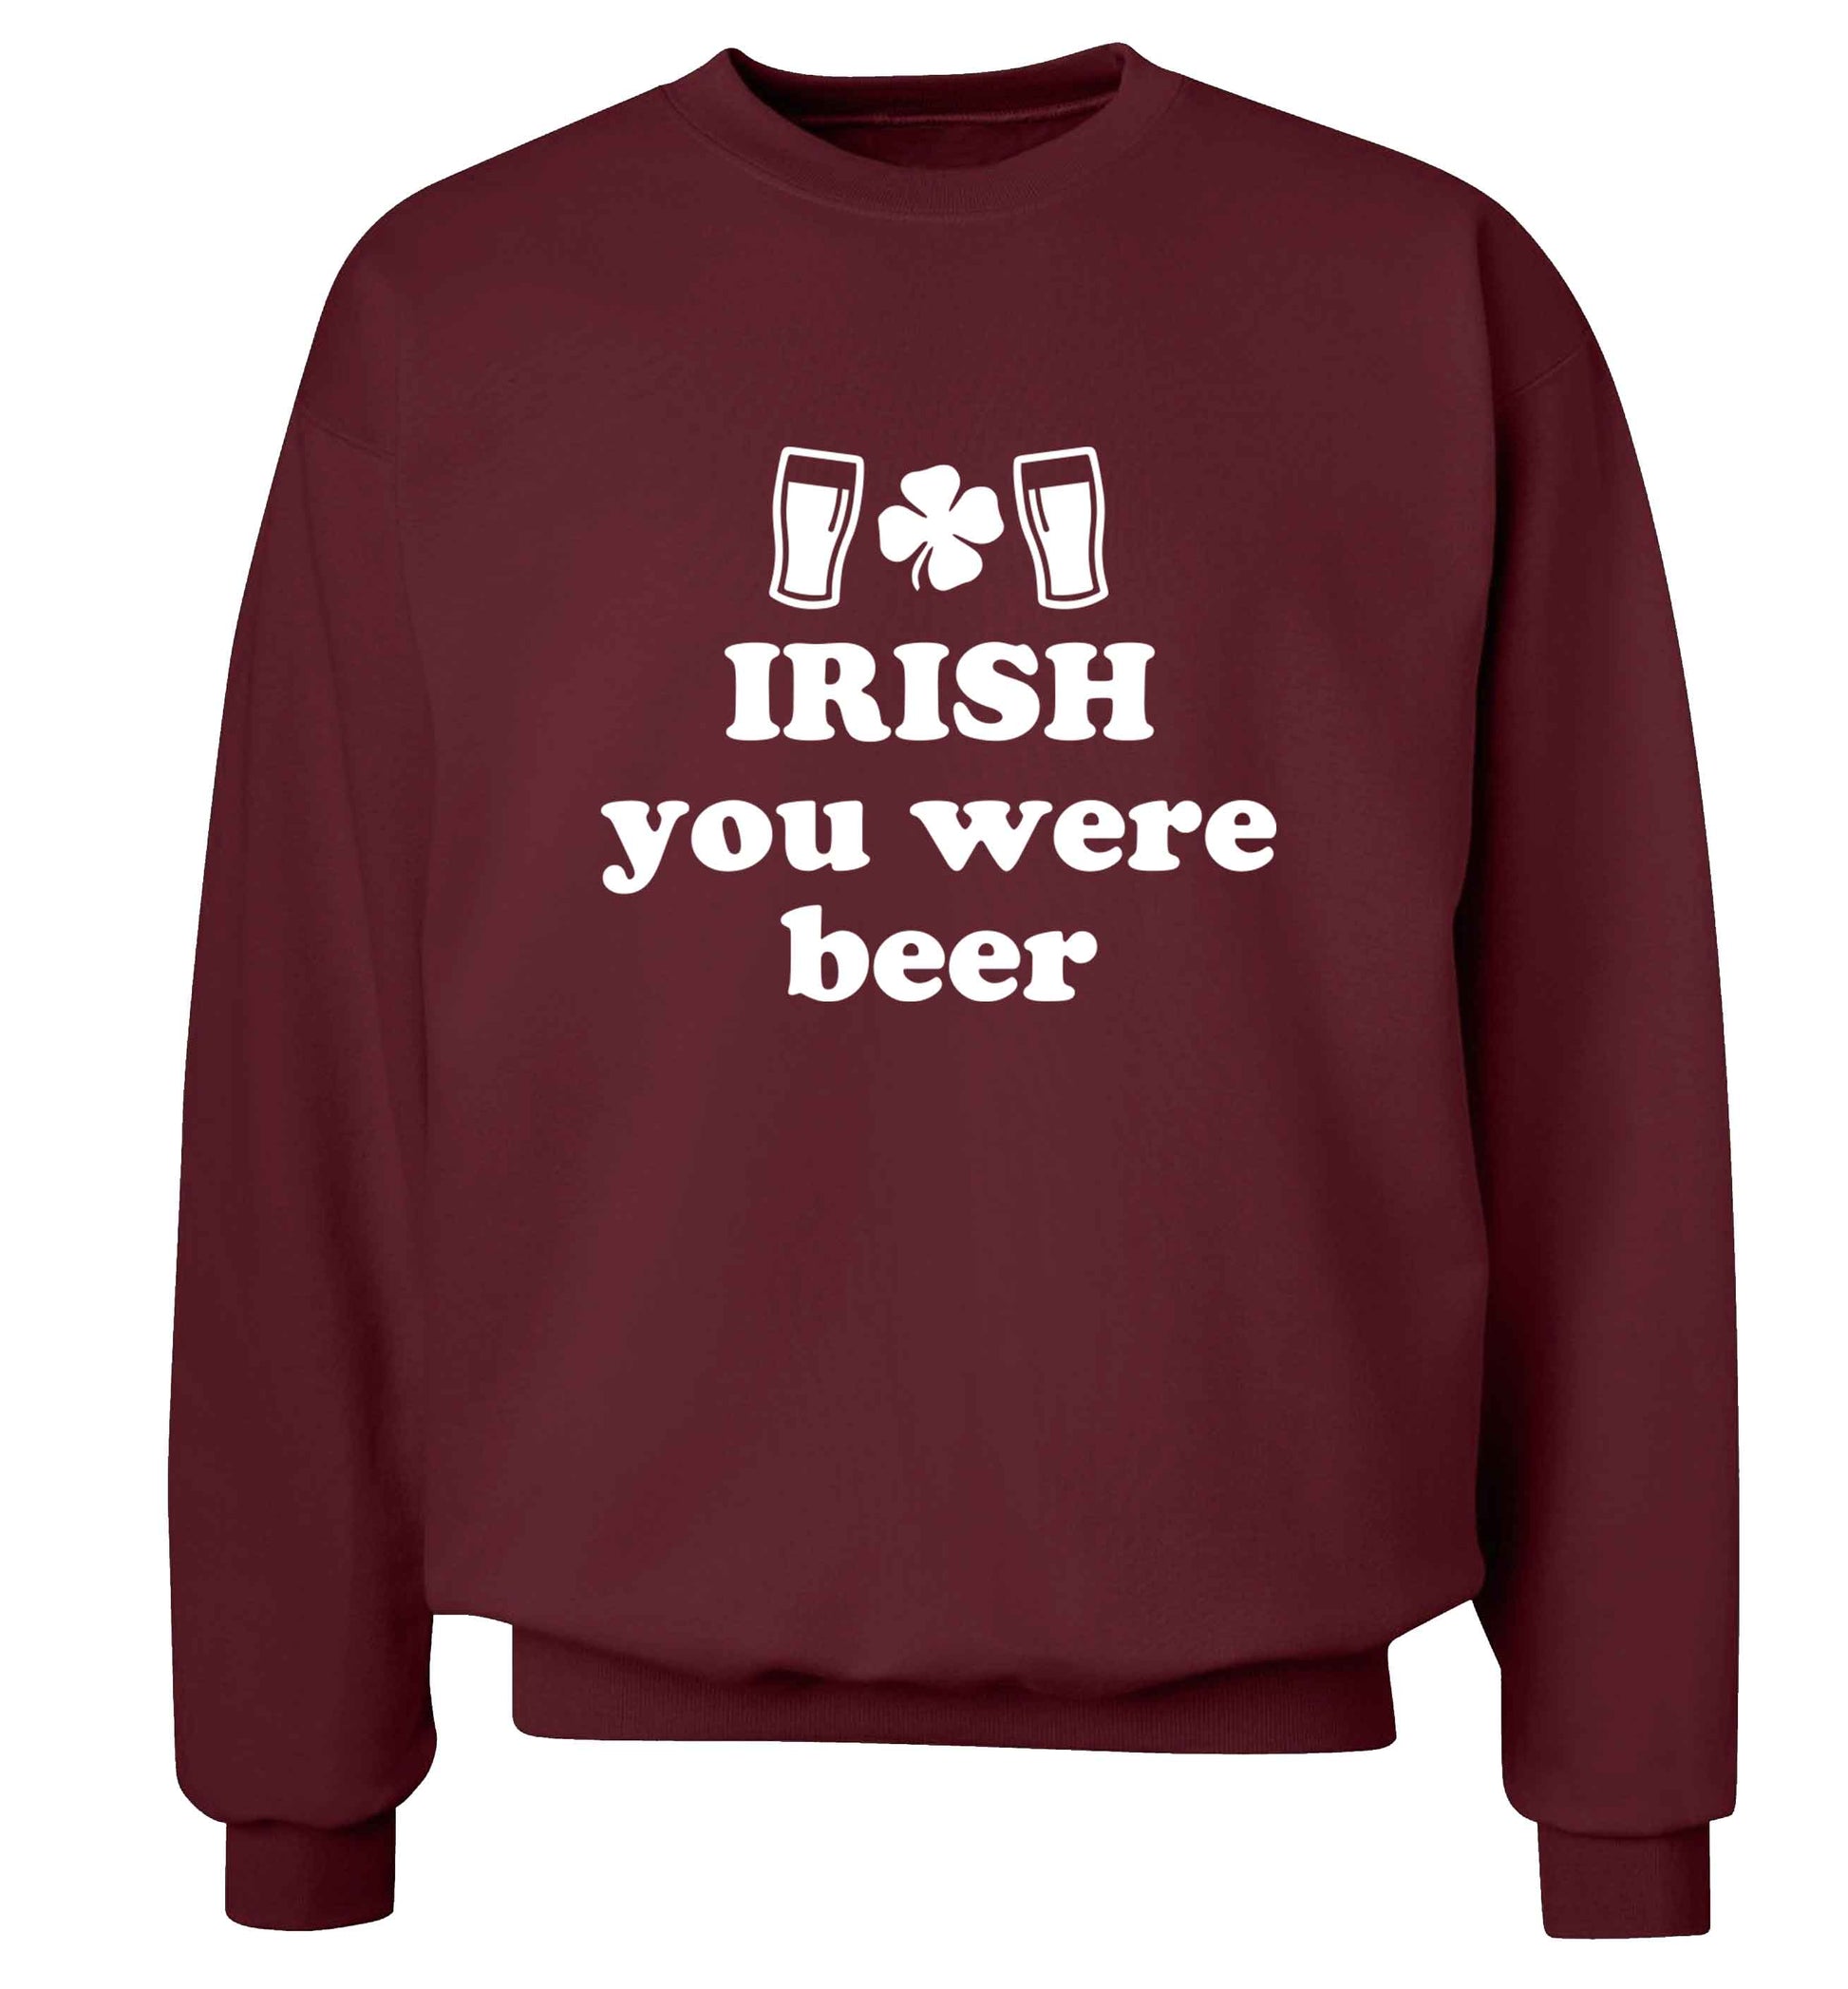 Irish you were beer adult's unisex maroon sweater 2XL